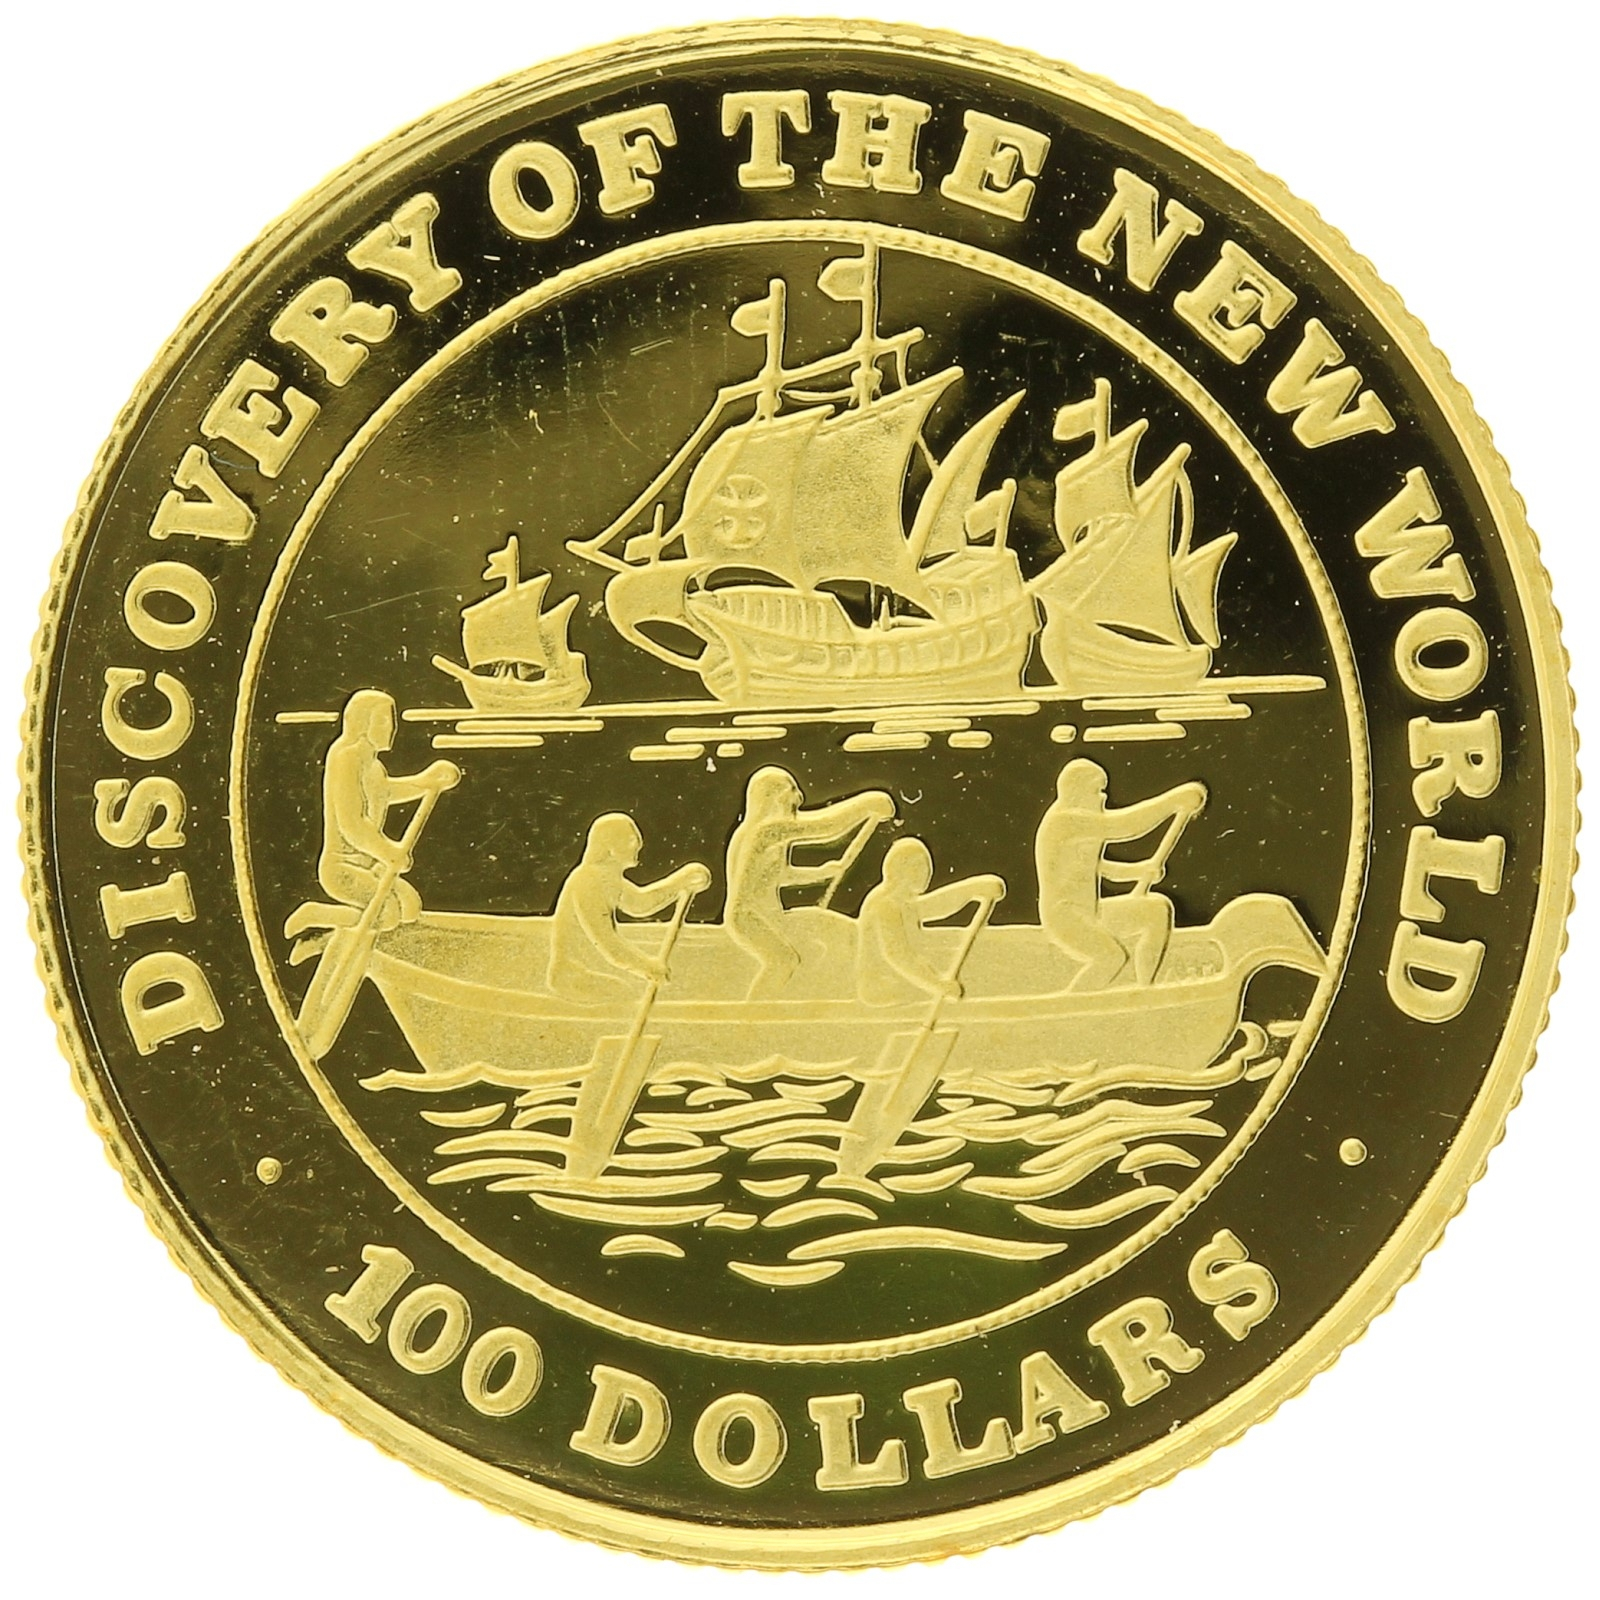 Bahamas - 100 dollars - 1991 - Discovery of New World